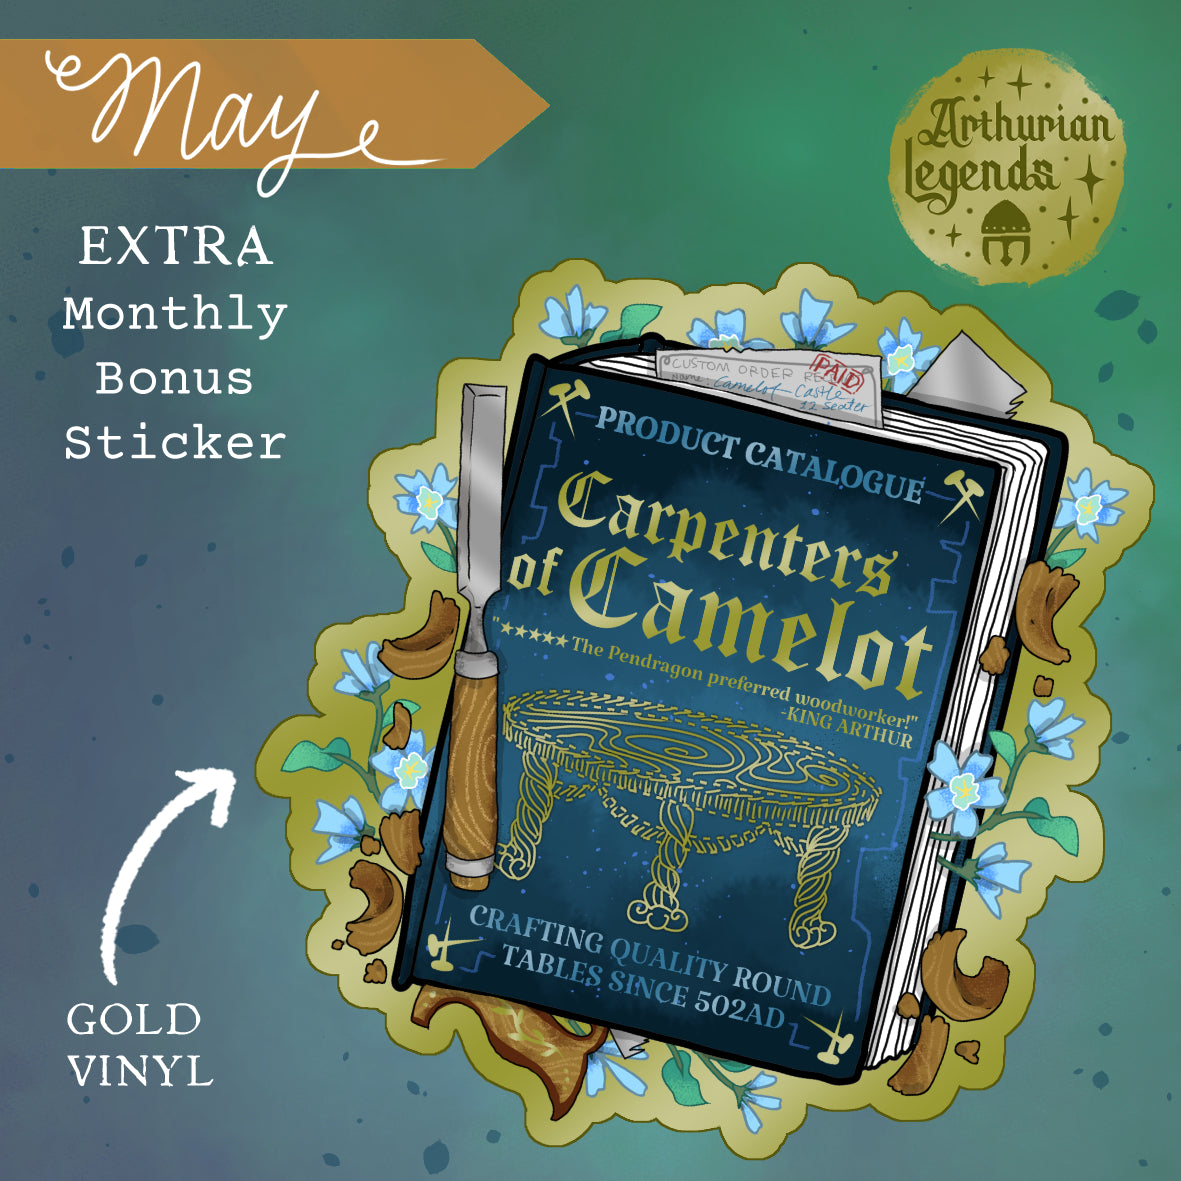 Bonus Monthly Vinyl Sticker | Carpenters of Camelot